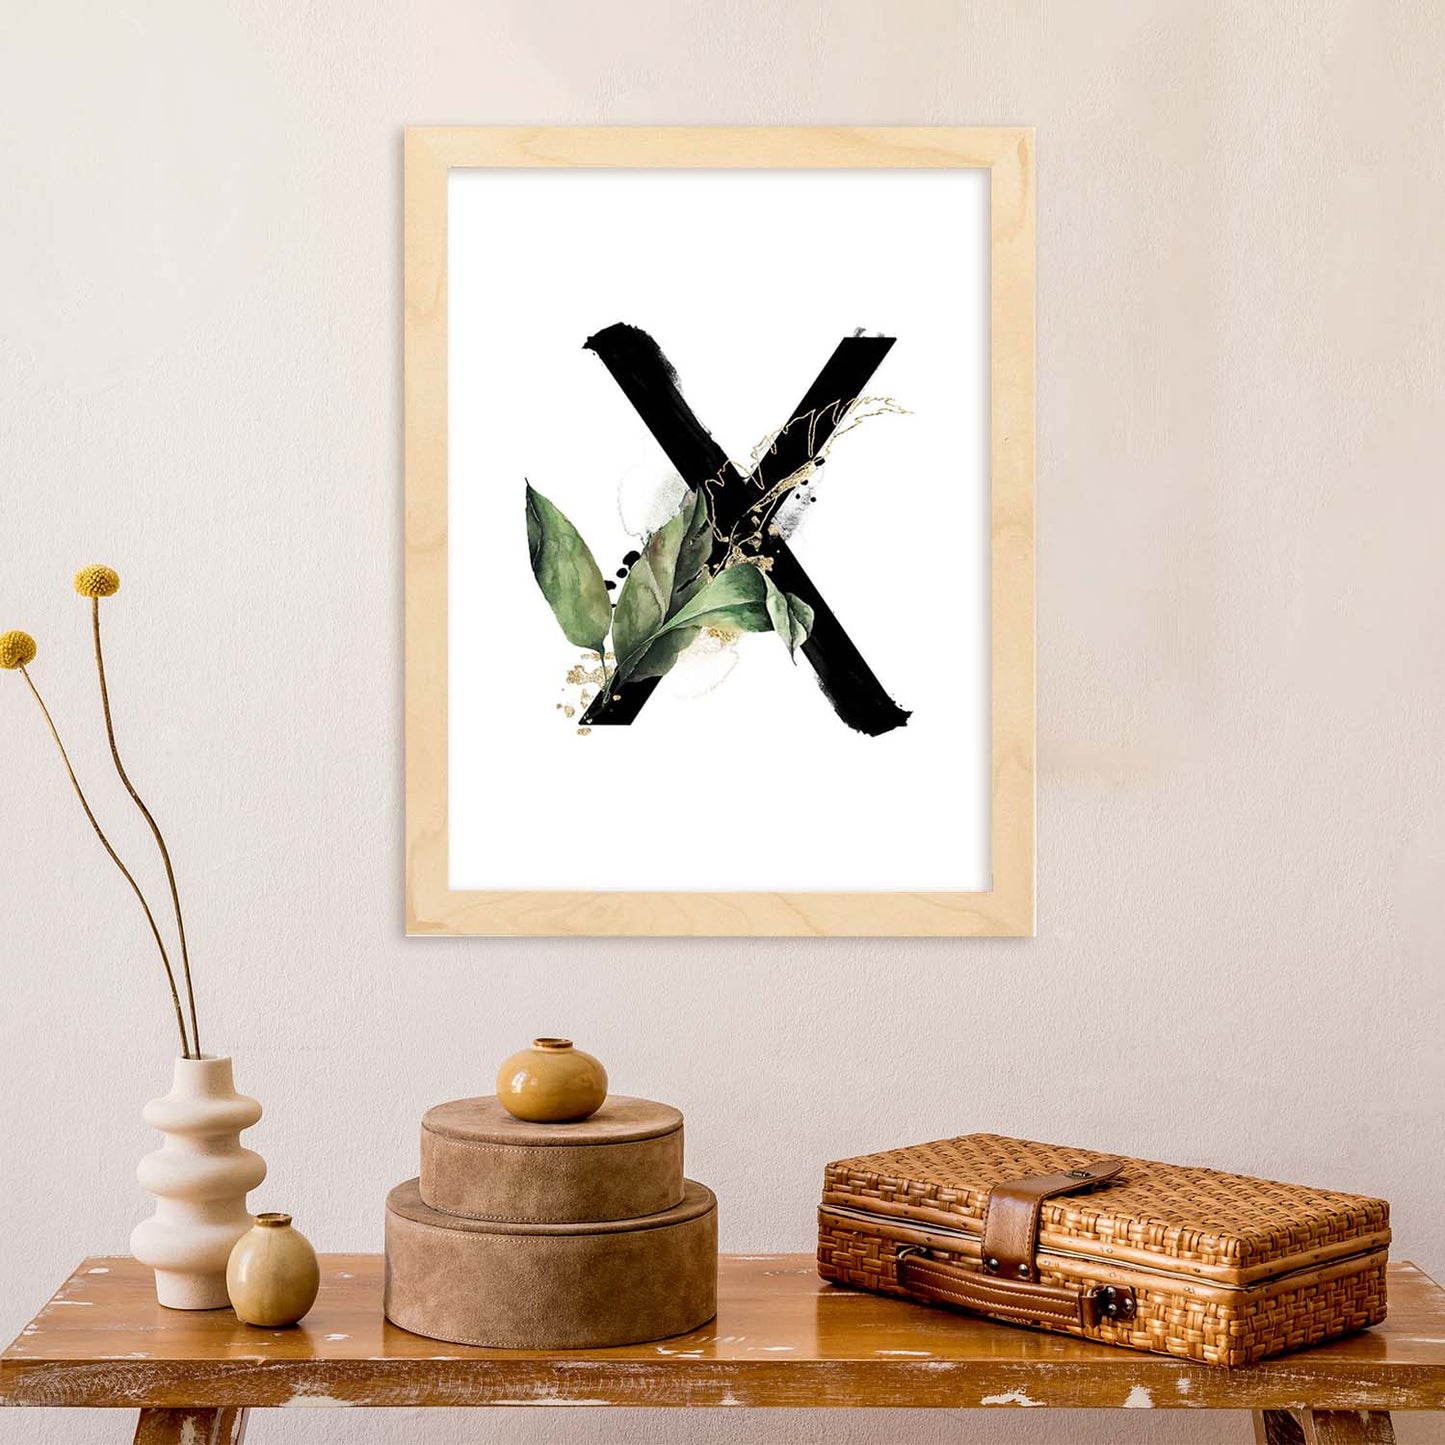 Poster de letra X. Lámina estilo Jungla Negra con imágenes del alfabeto.-Artwork-Nacnic-Nacnic Estudio SL